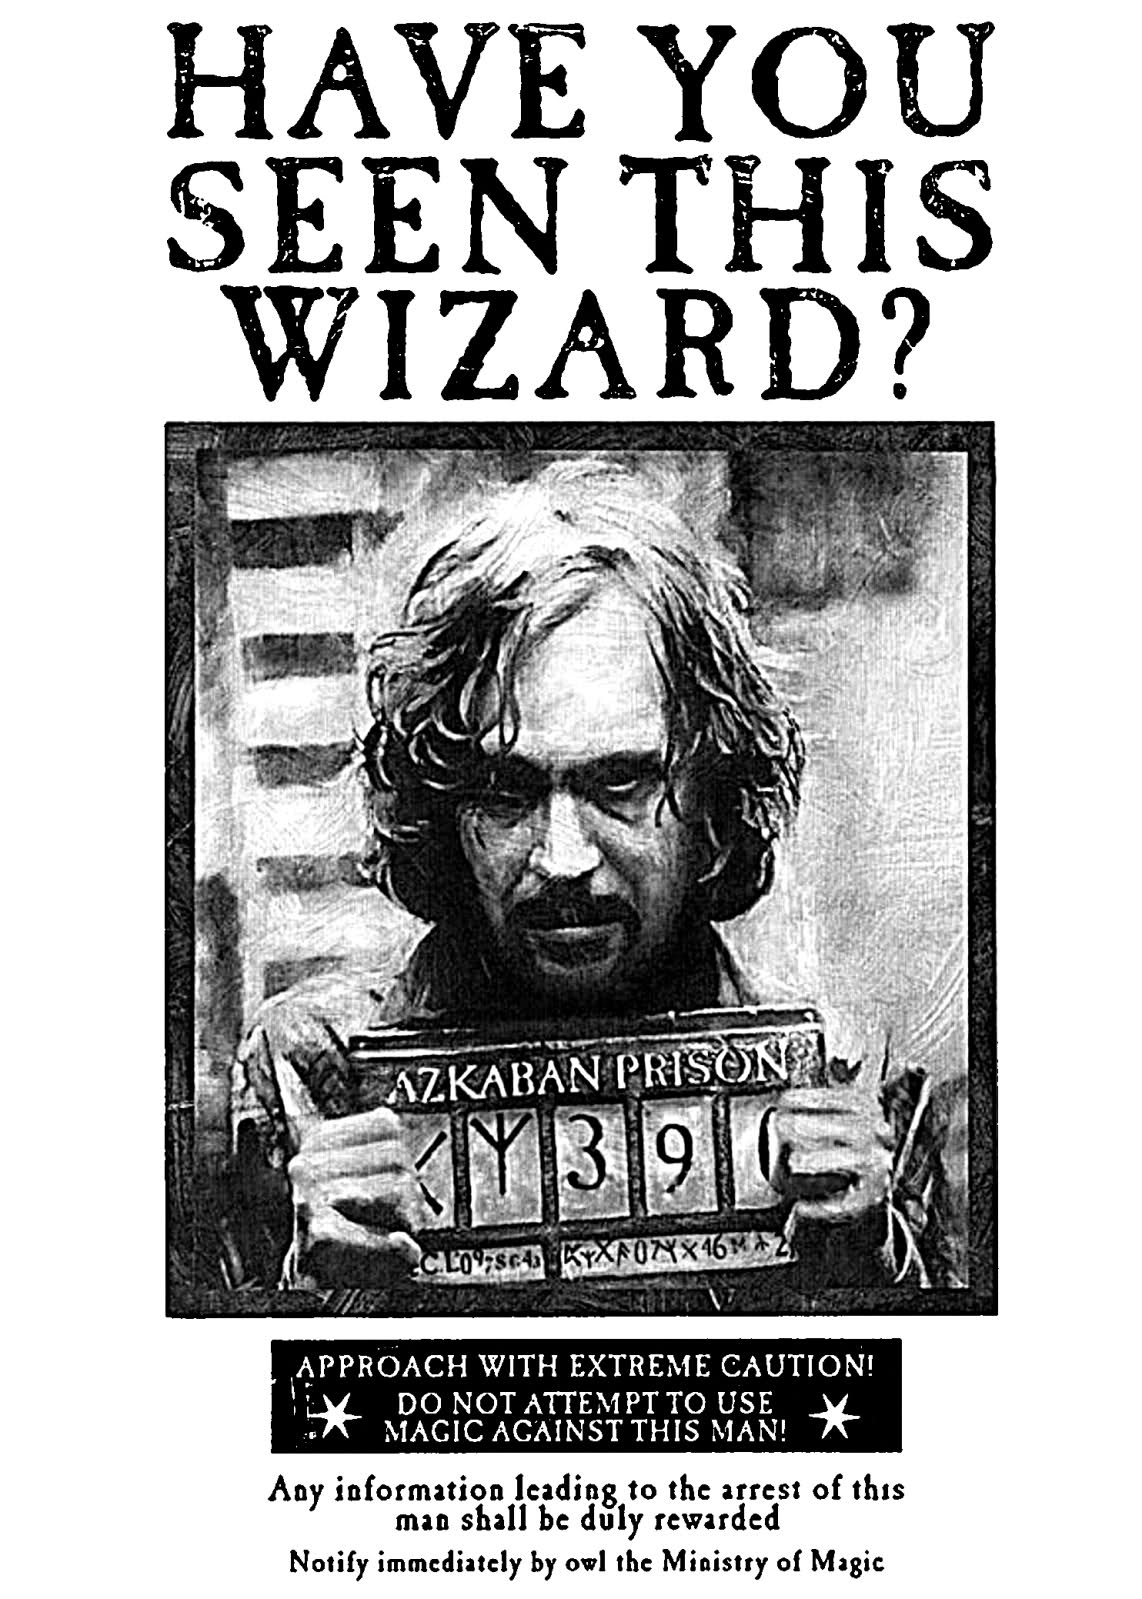 Image Sirius Black Wanted Poster.jpg Harry Potter Wiki FANDOM